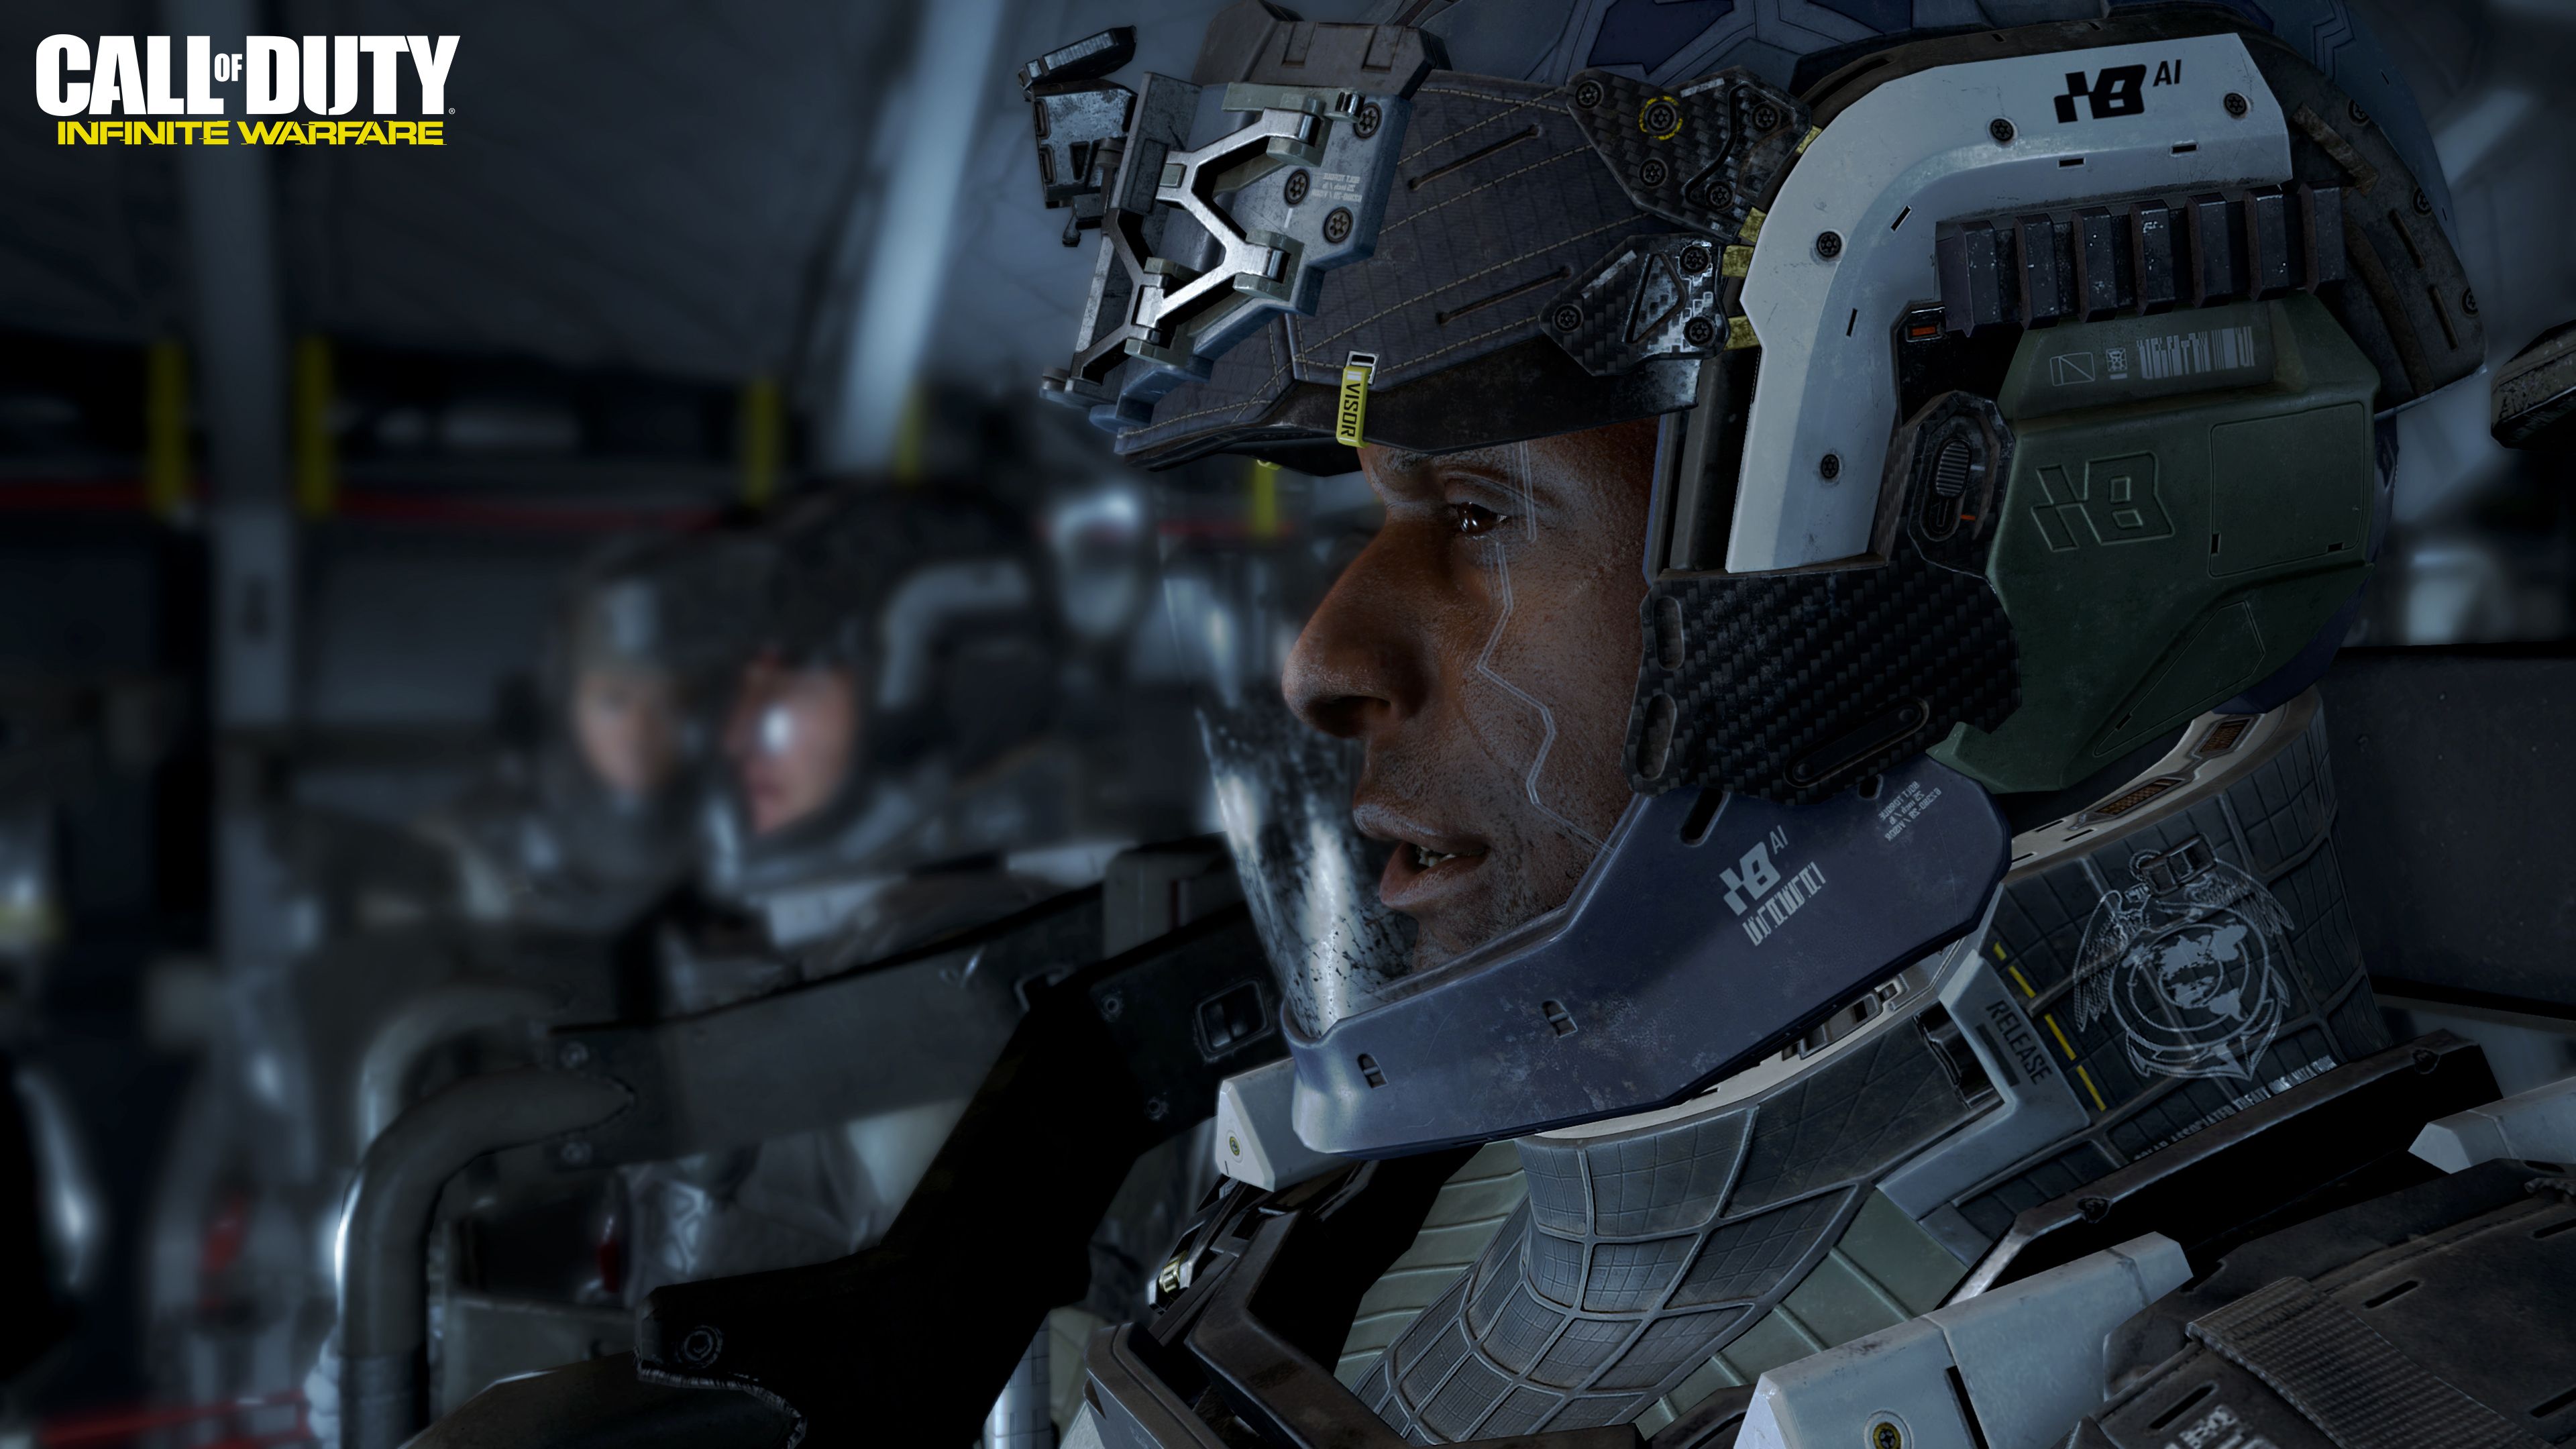 cod infinite warfare wallpaper,helmet,pc game,soldier,shooter game,screenshot